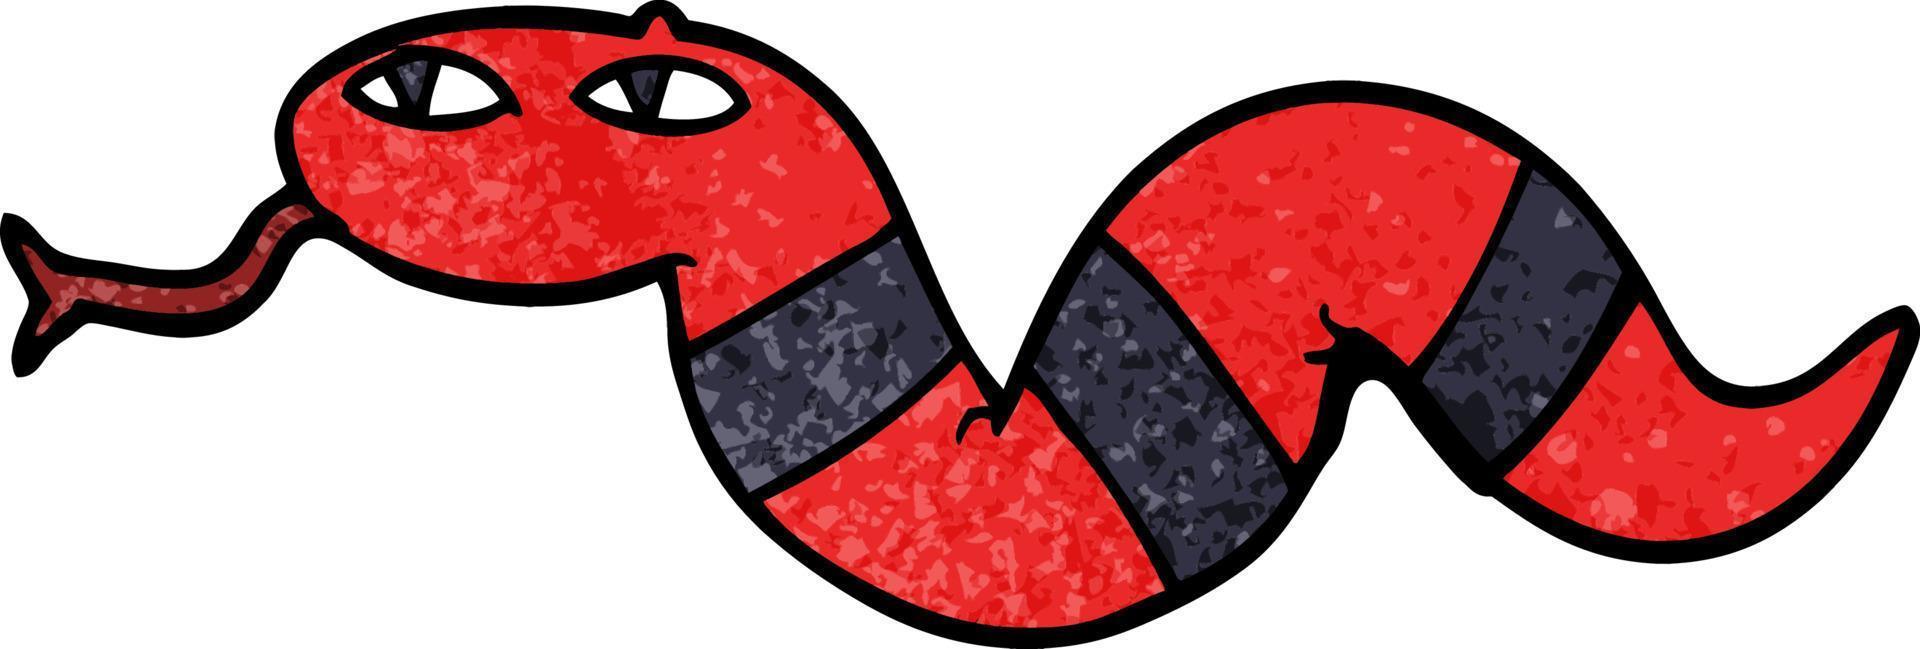 cartoon doodle of a snake vector